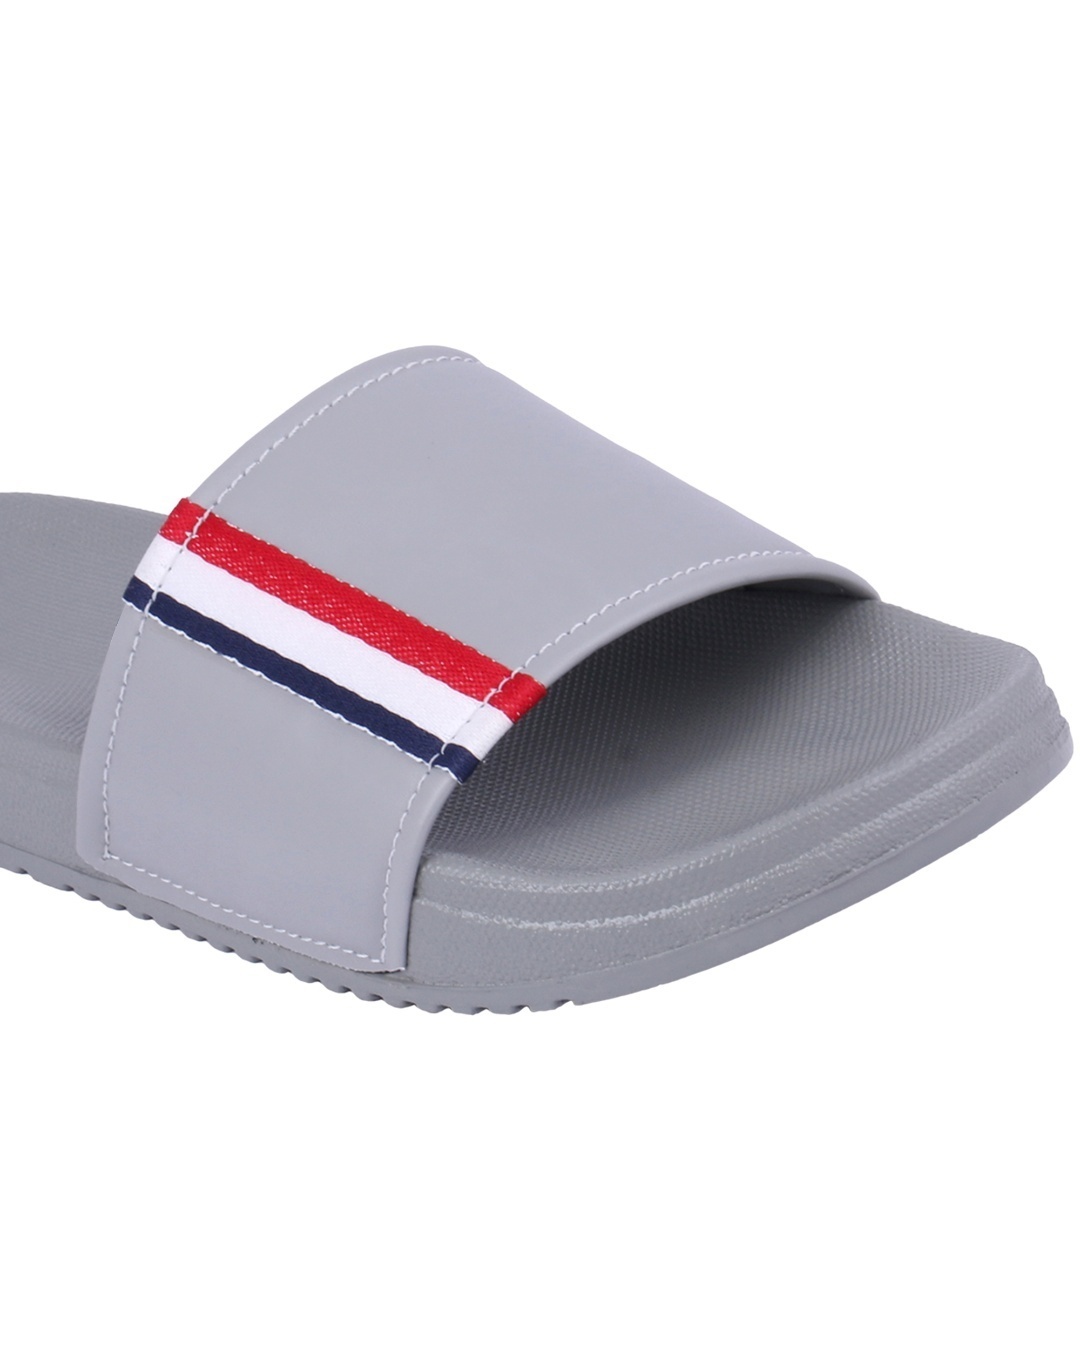 Shop Men's Grey Slip-On Sliders